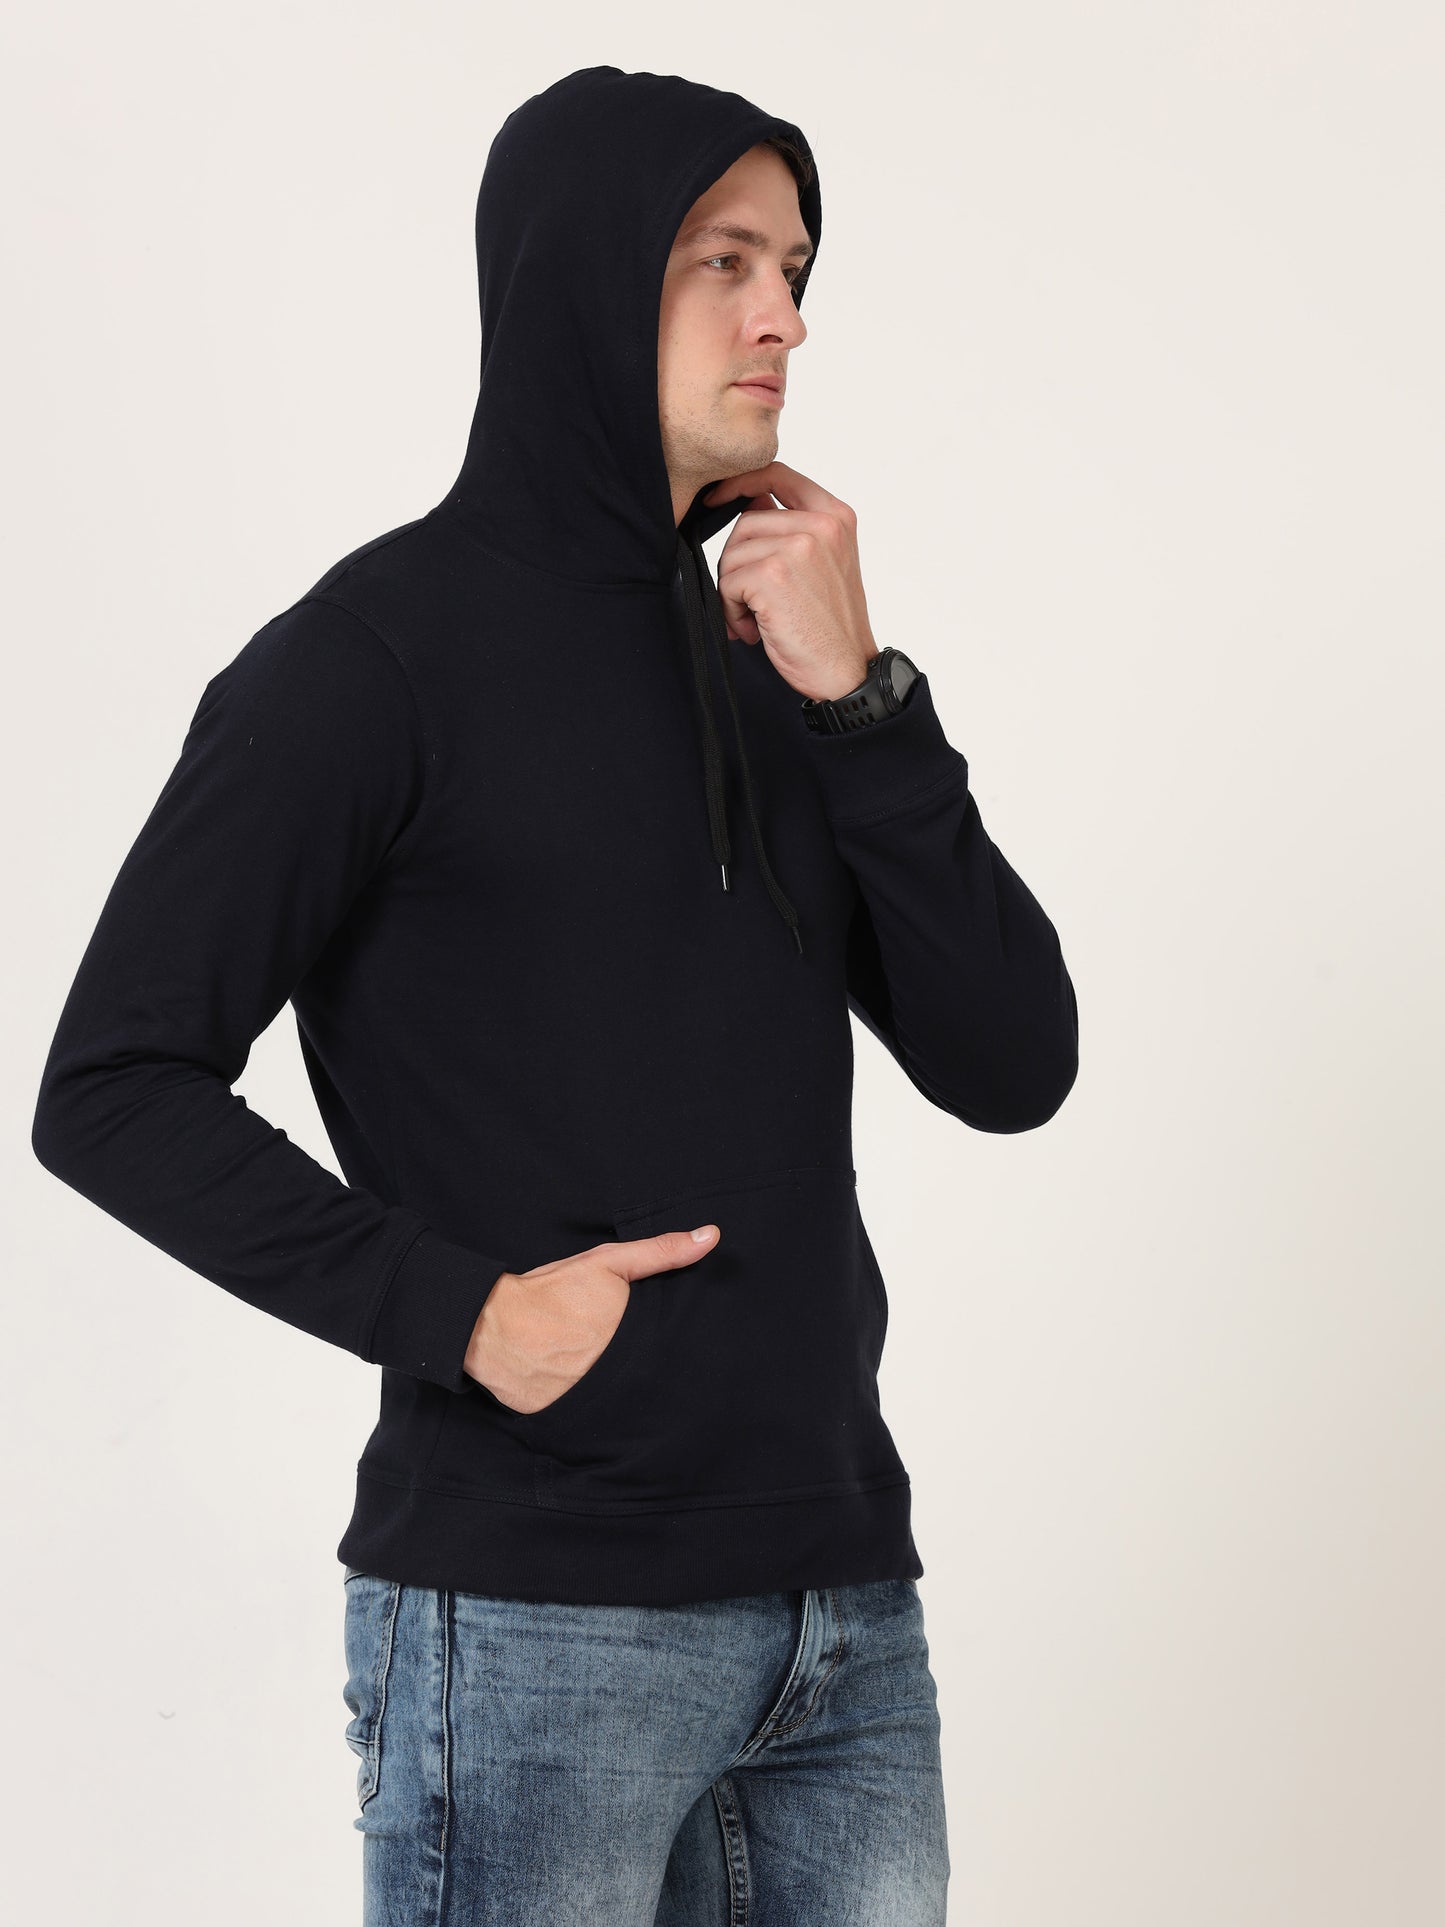 Men's Cotton Hooded Neck Plain Navy Blue Color Sweatshirt/Hoodies